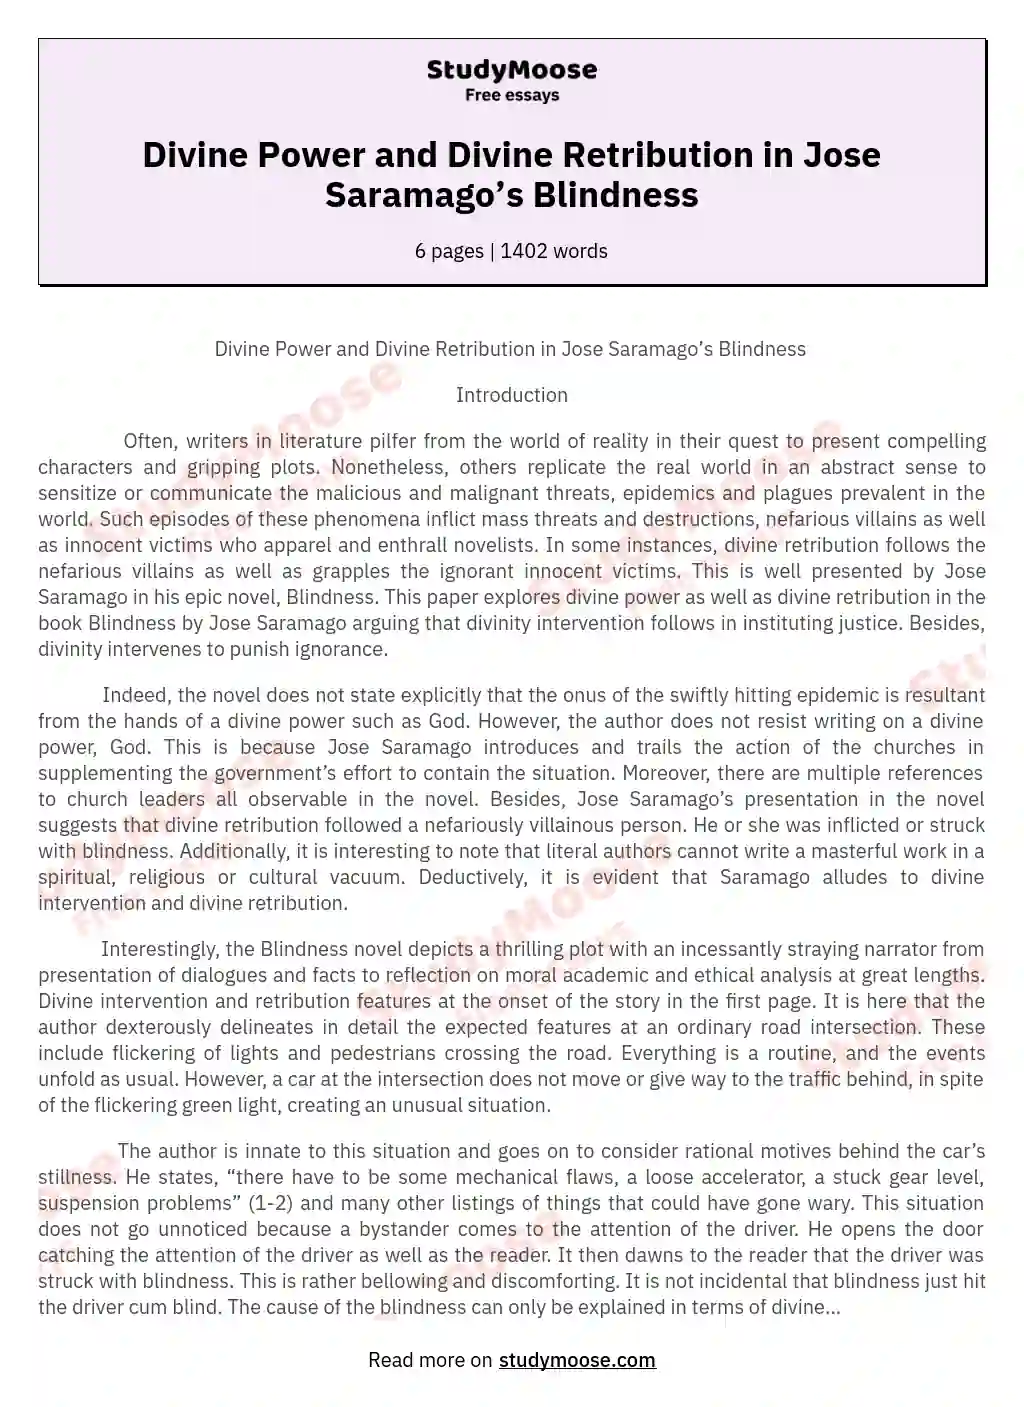 Divine Power and Divine Retribution in Jose Saramago’s Blindness essay